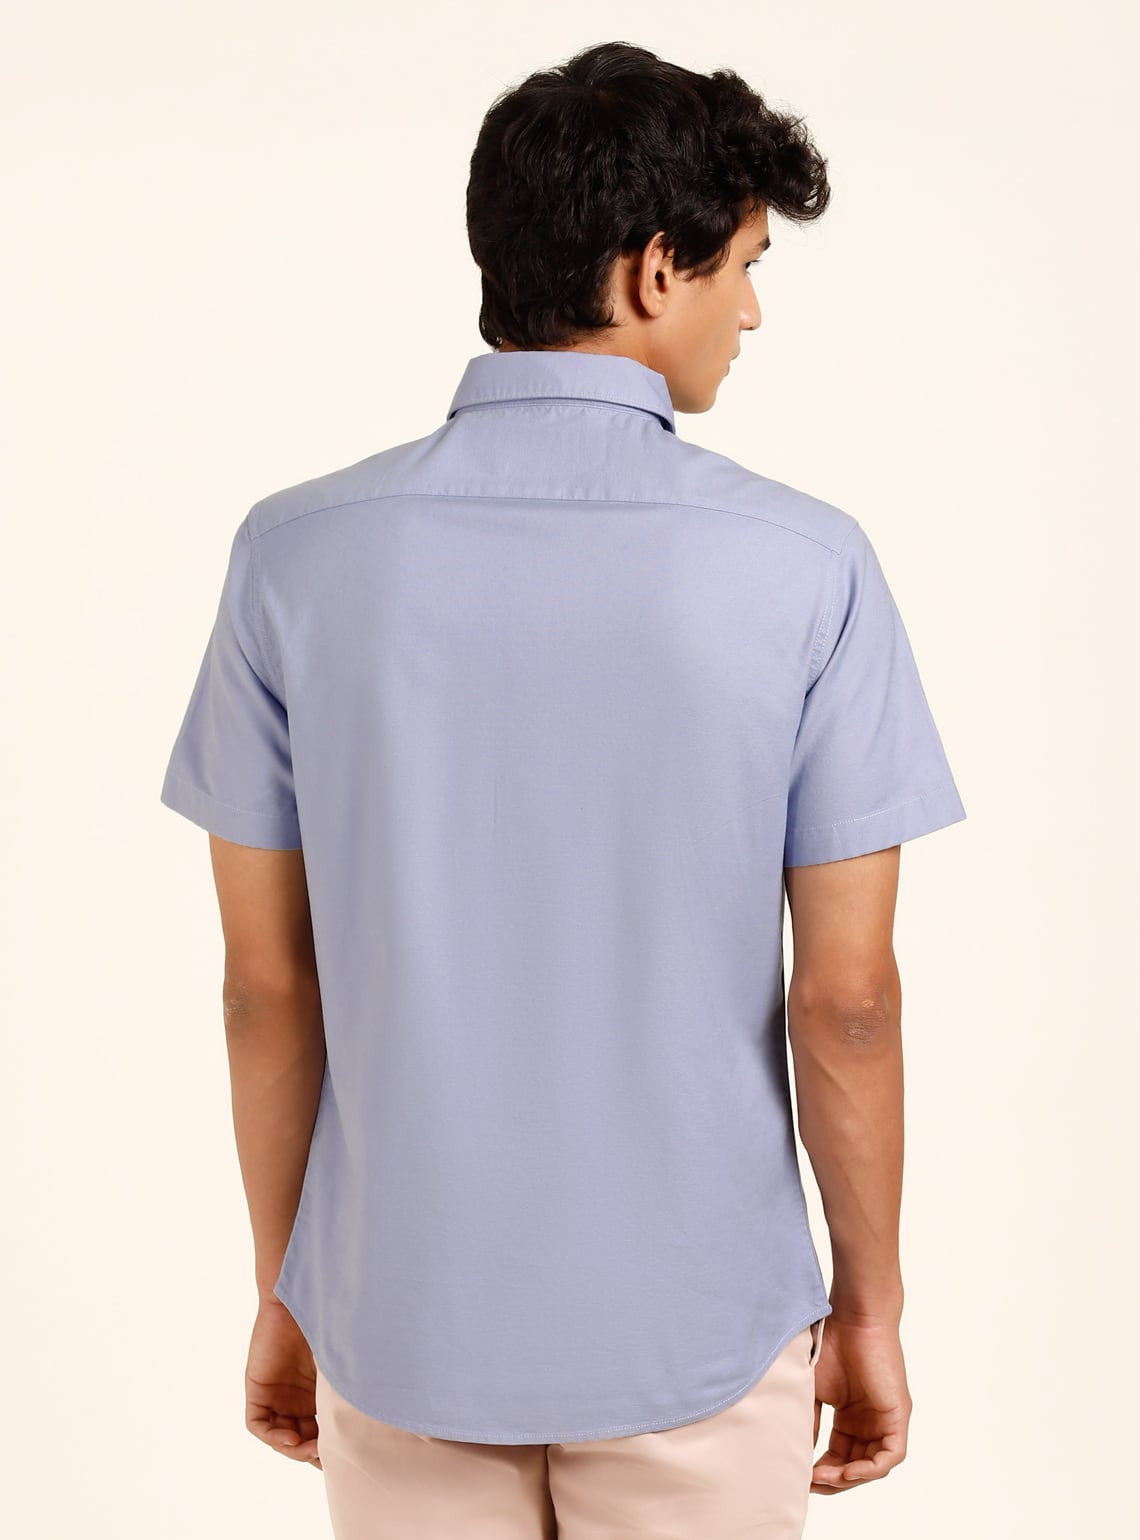 Cool Lavender Shirt - Half